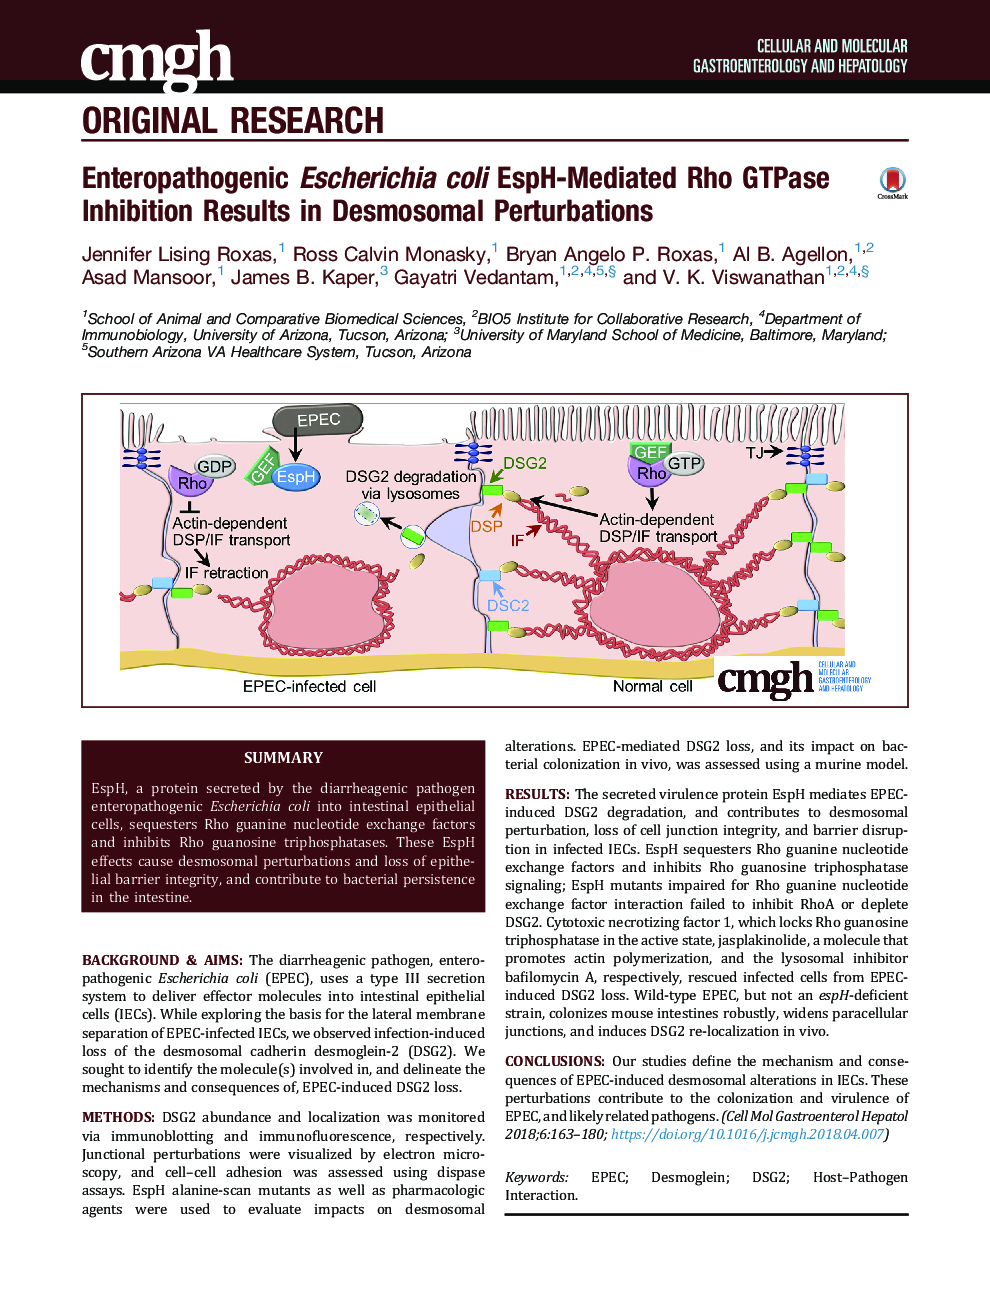 Enteropathogenic Escherichia coli EspH-Mediated Rho GTPase Inhibition Results in Desmosomal Perturbations